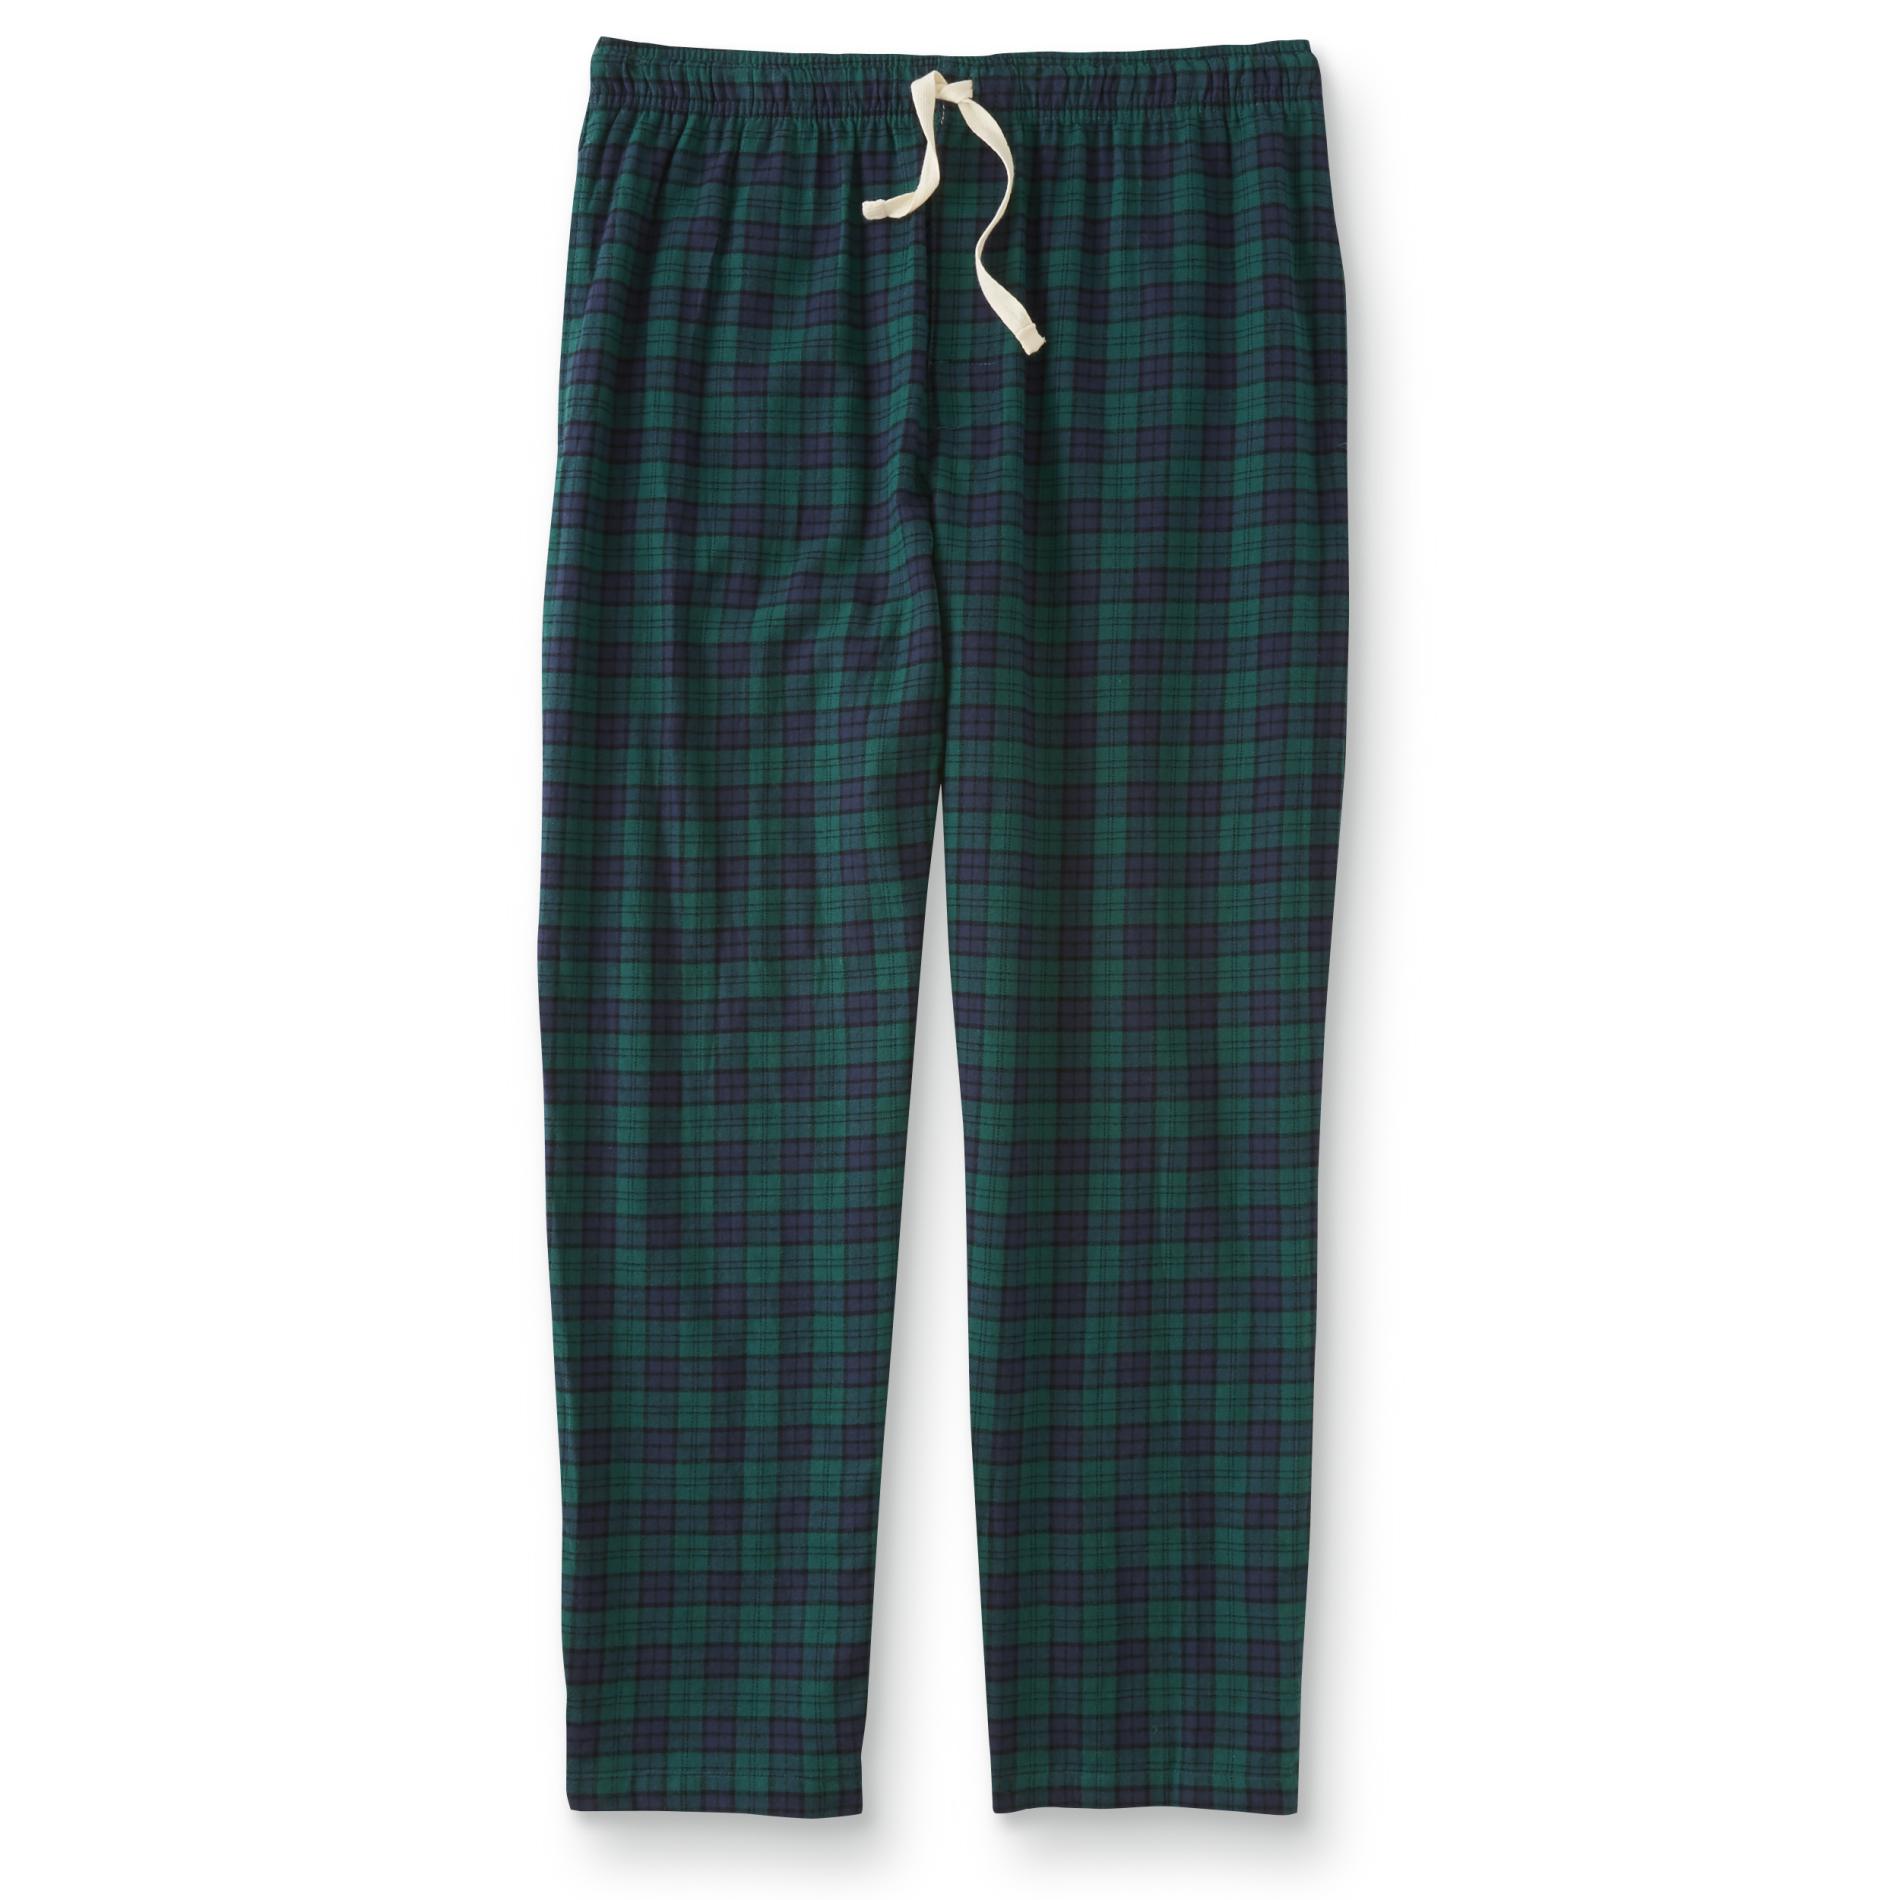 Outdoor Life Men's Flannel Pajama Pants-Plaid